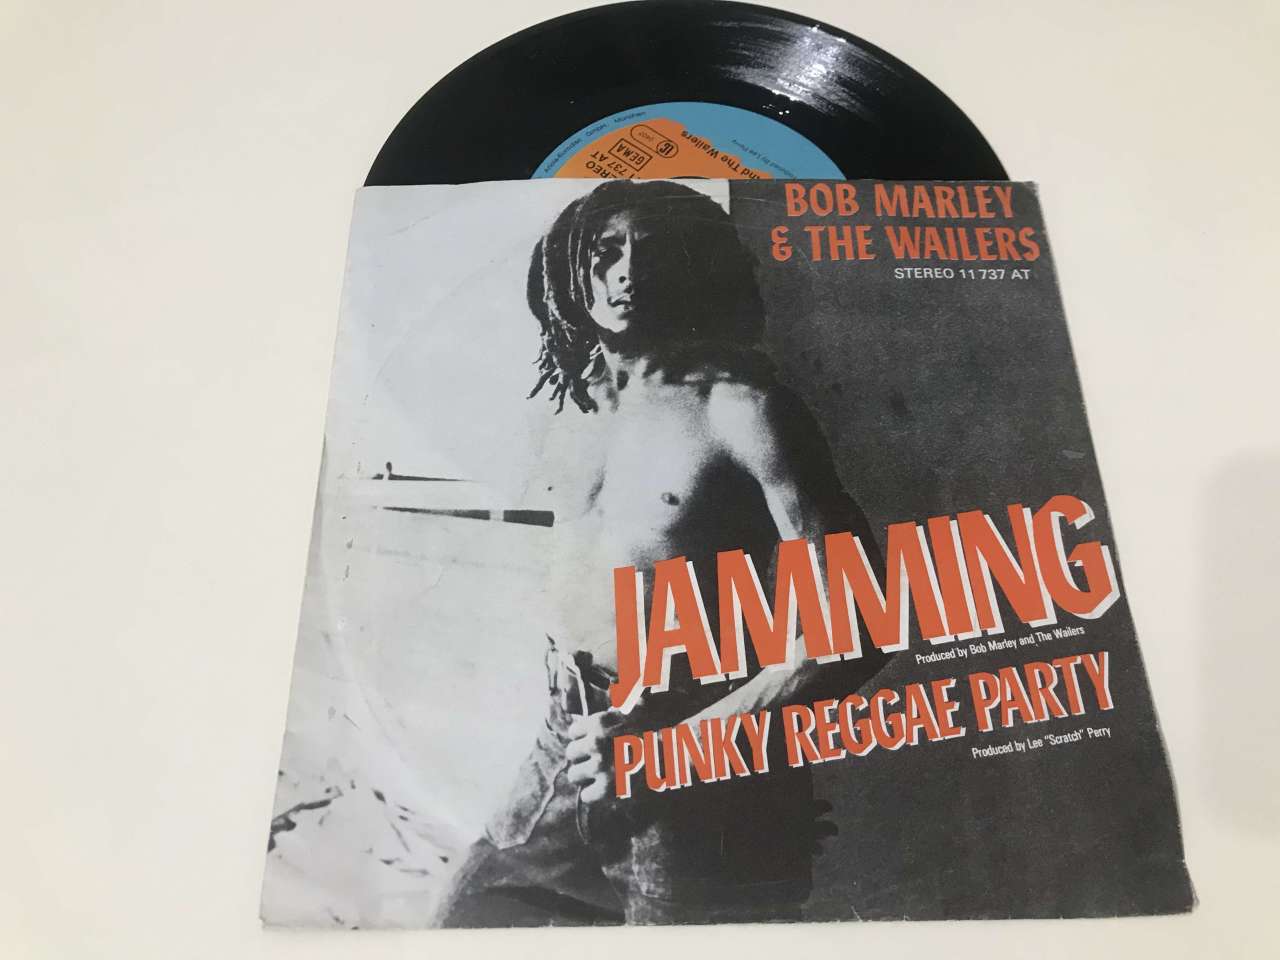 Bob Marley & The Wailers ‎– Jamming / Punky Reggae Party